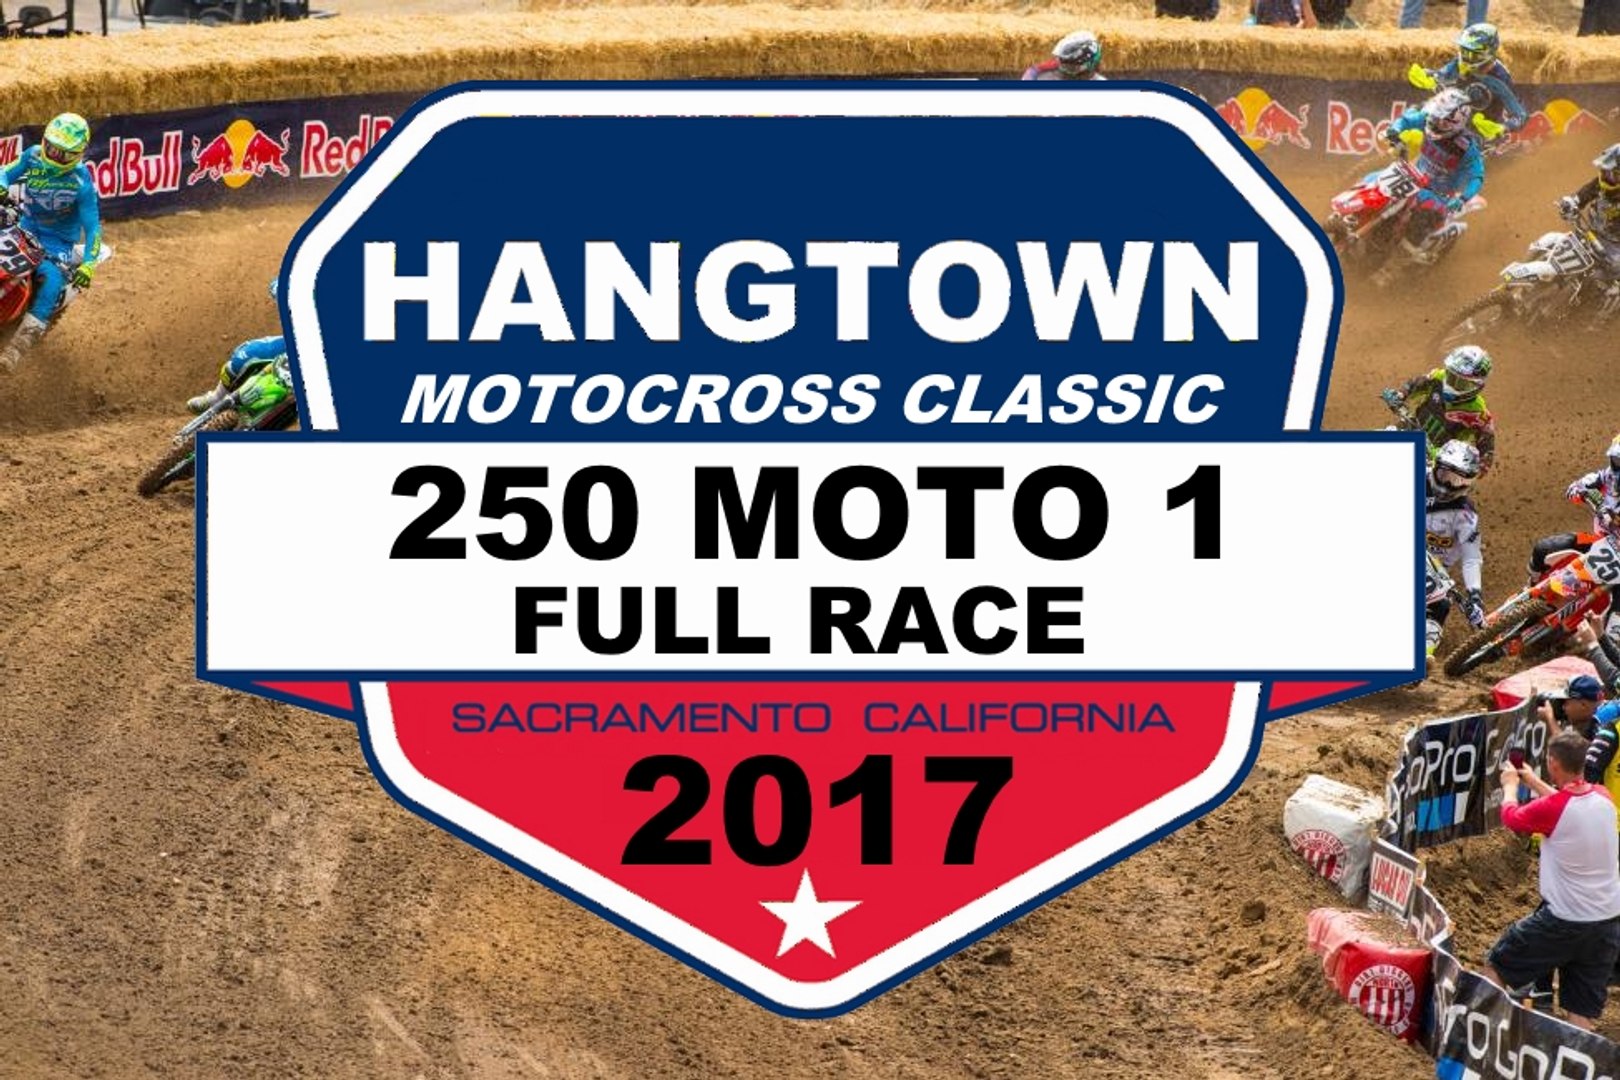 250 MOTO 1 - AMA MOTOCROSS 2017 ROUND 1 HANGTOWN MX CLASS FULL RACE